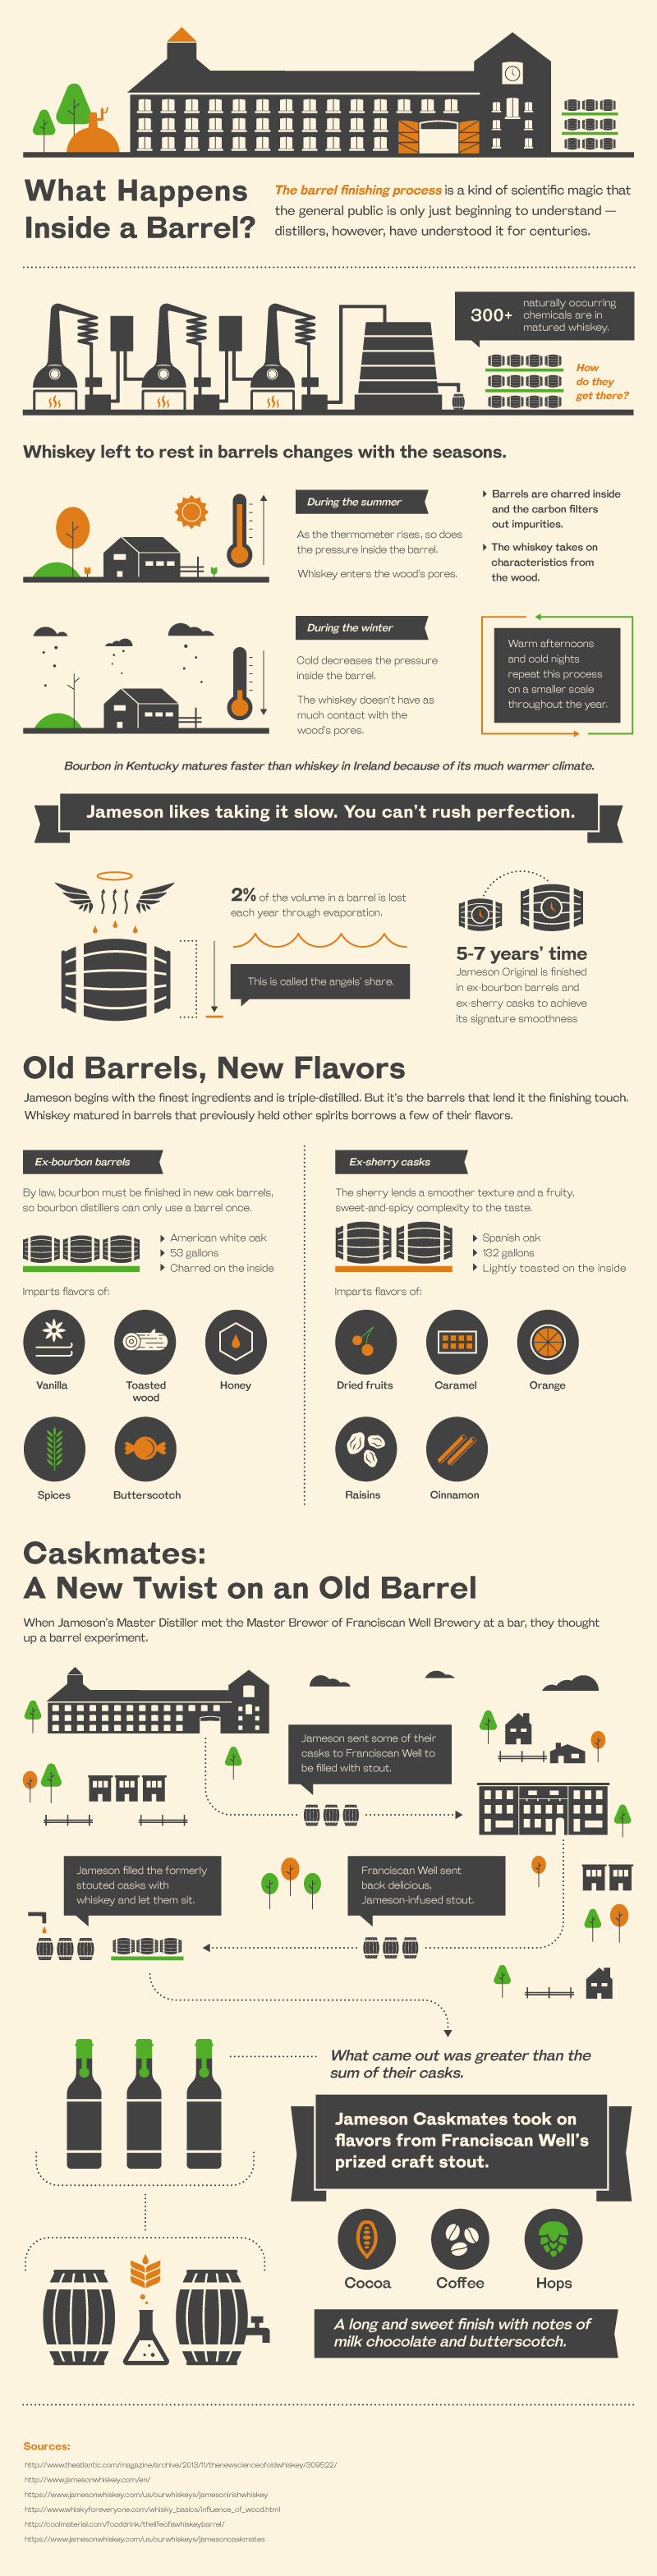 Jameson Caskmates Irish Whiskey Infographic